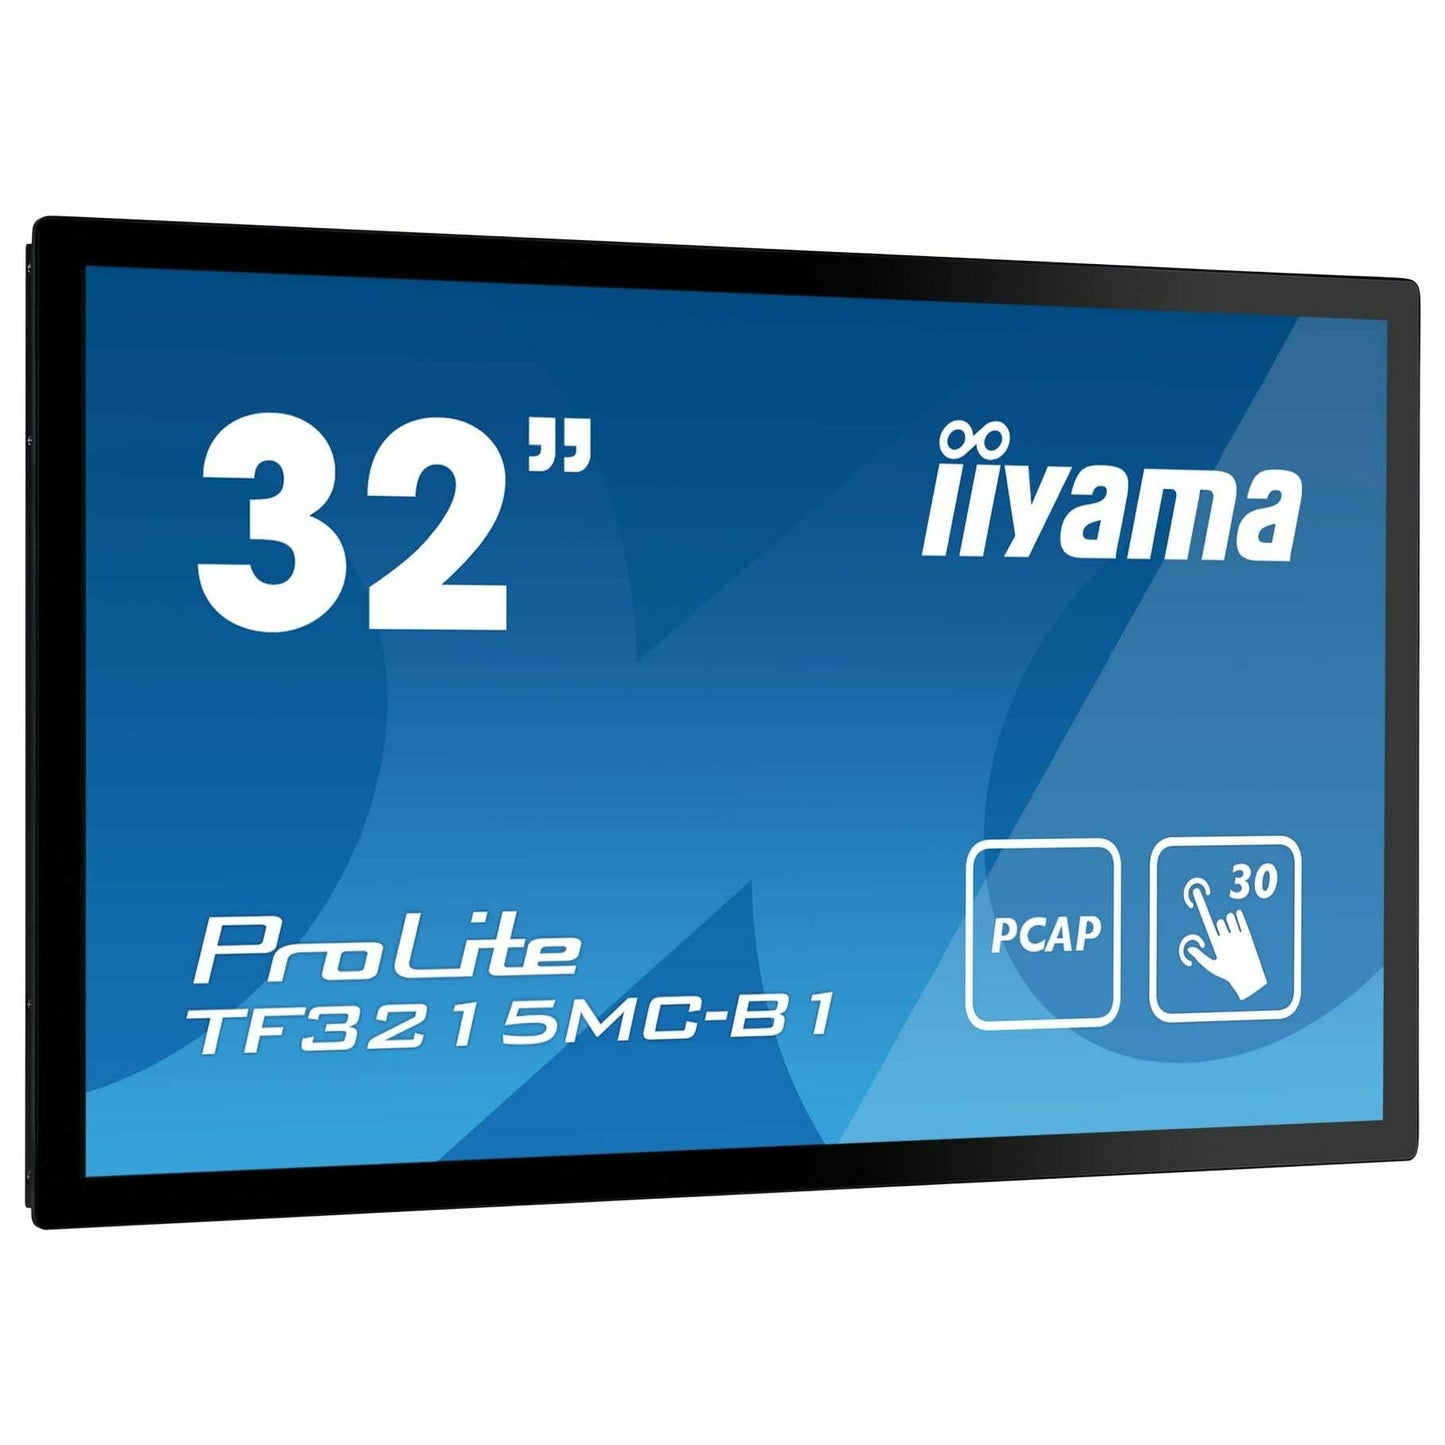 Dark Cyan iiyama ProLite TF3215MC-B1 32" Capacitive Touch Screen Display